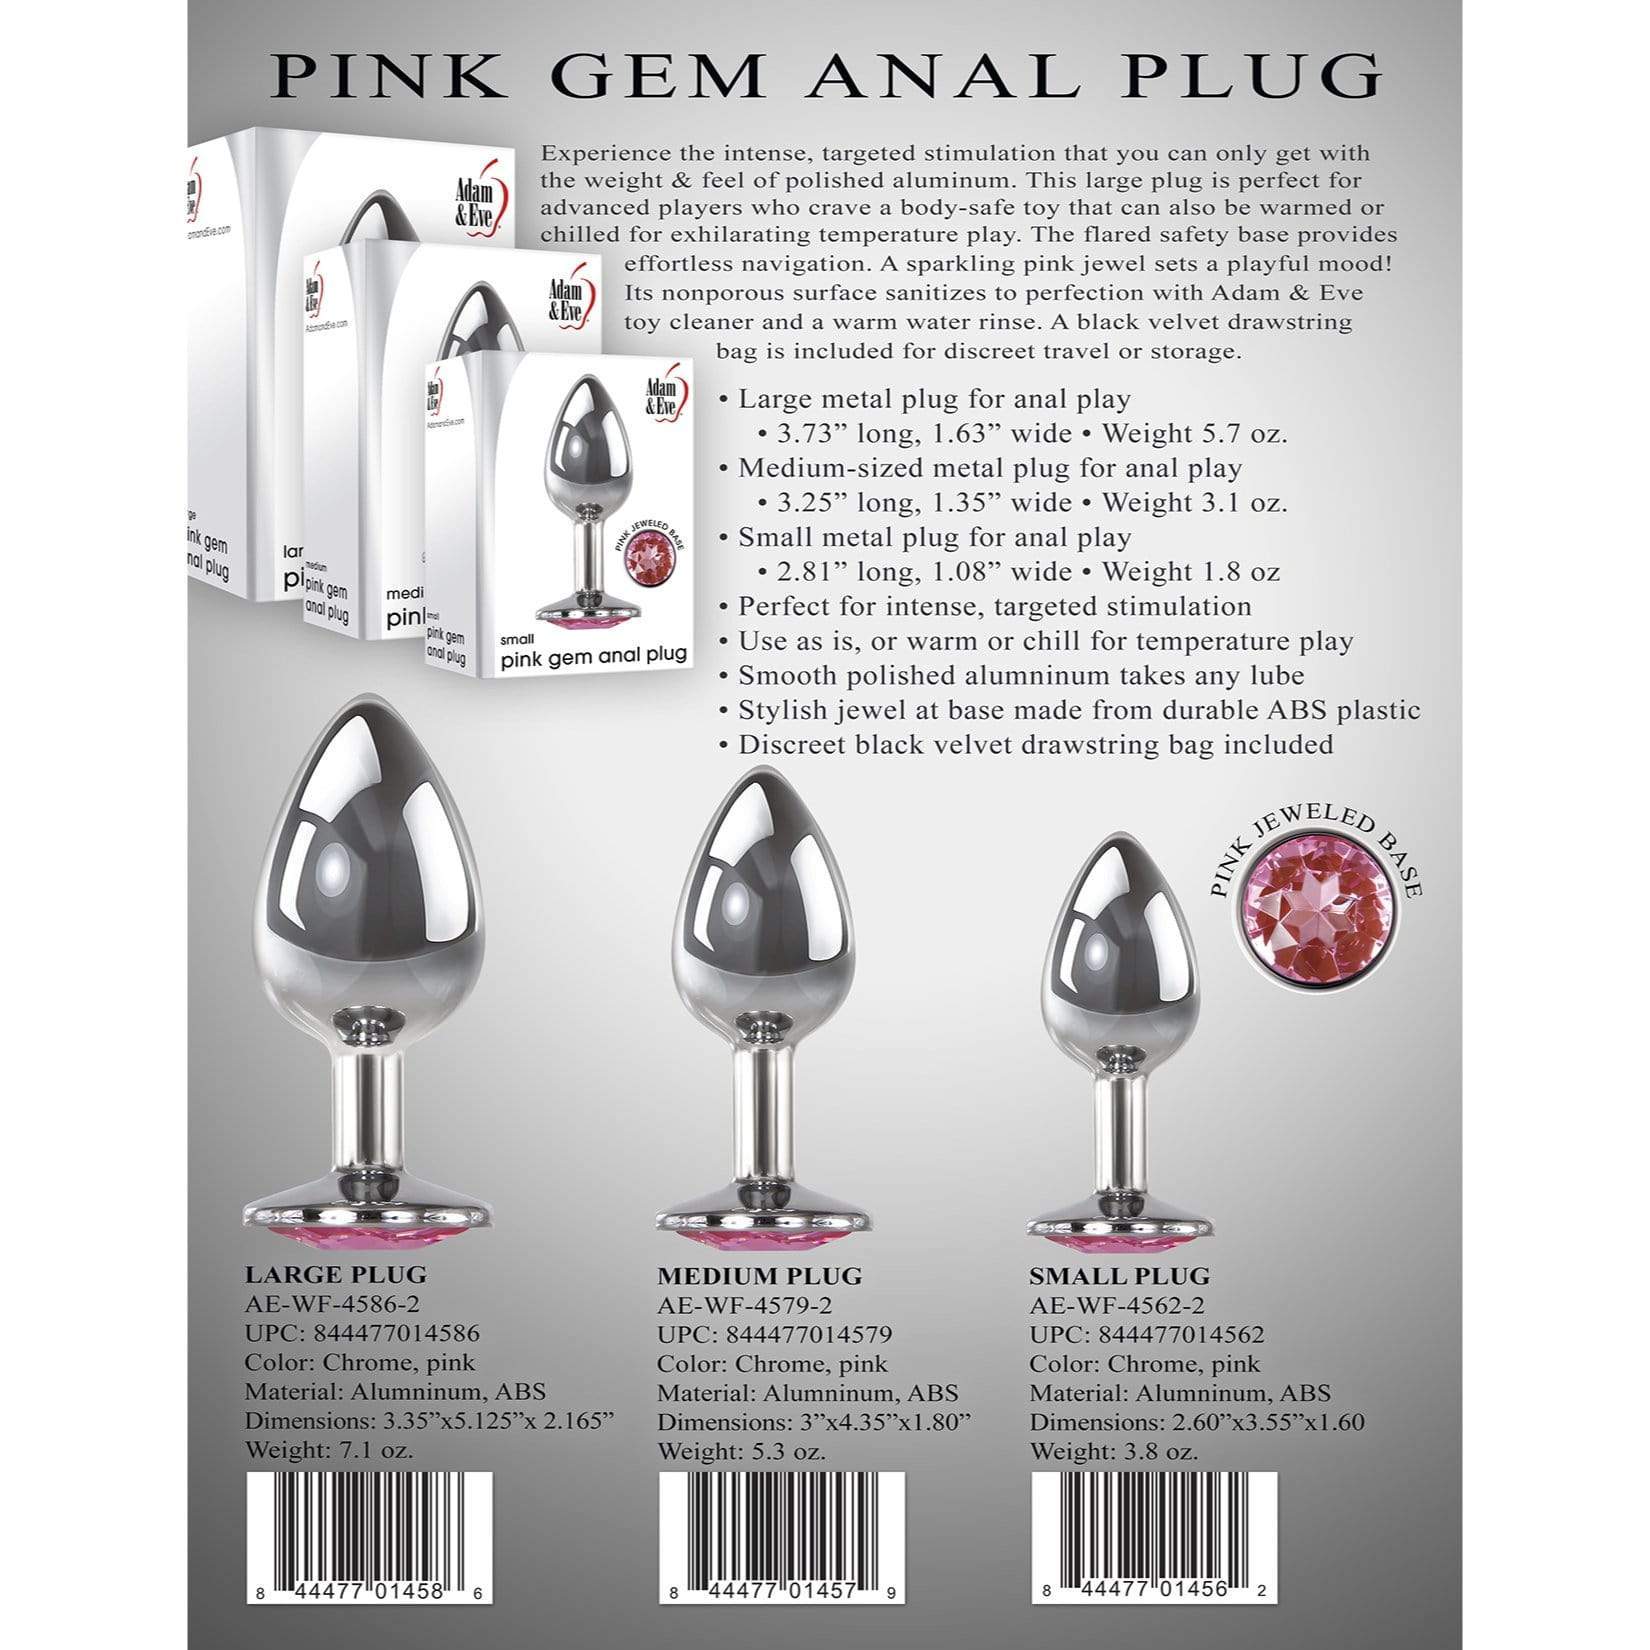 Adam & Eve - Pink Gem Aluminium Anal Plug Medium (Silver) Metal Anal Plug (Non Vibration) 844477014579 CherryAffairs